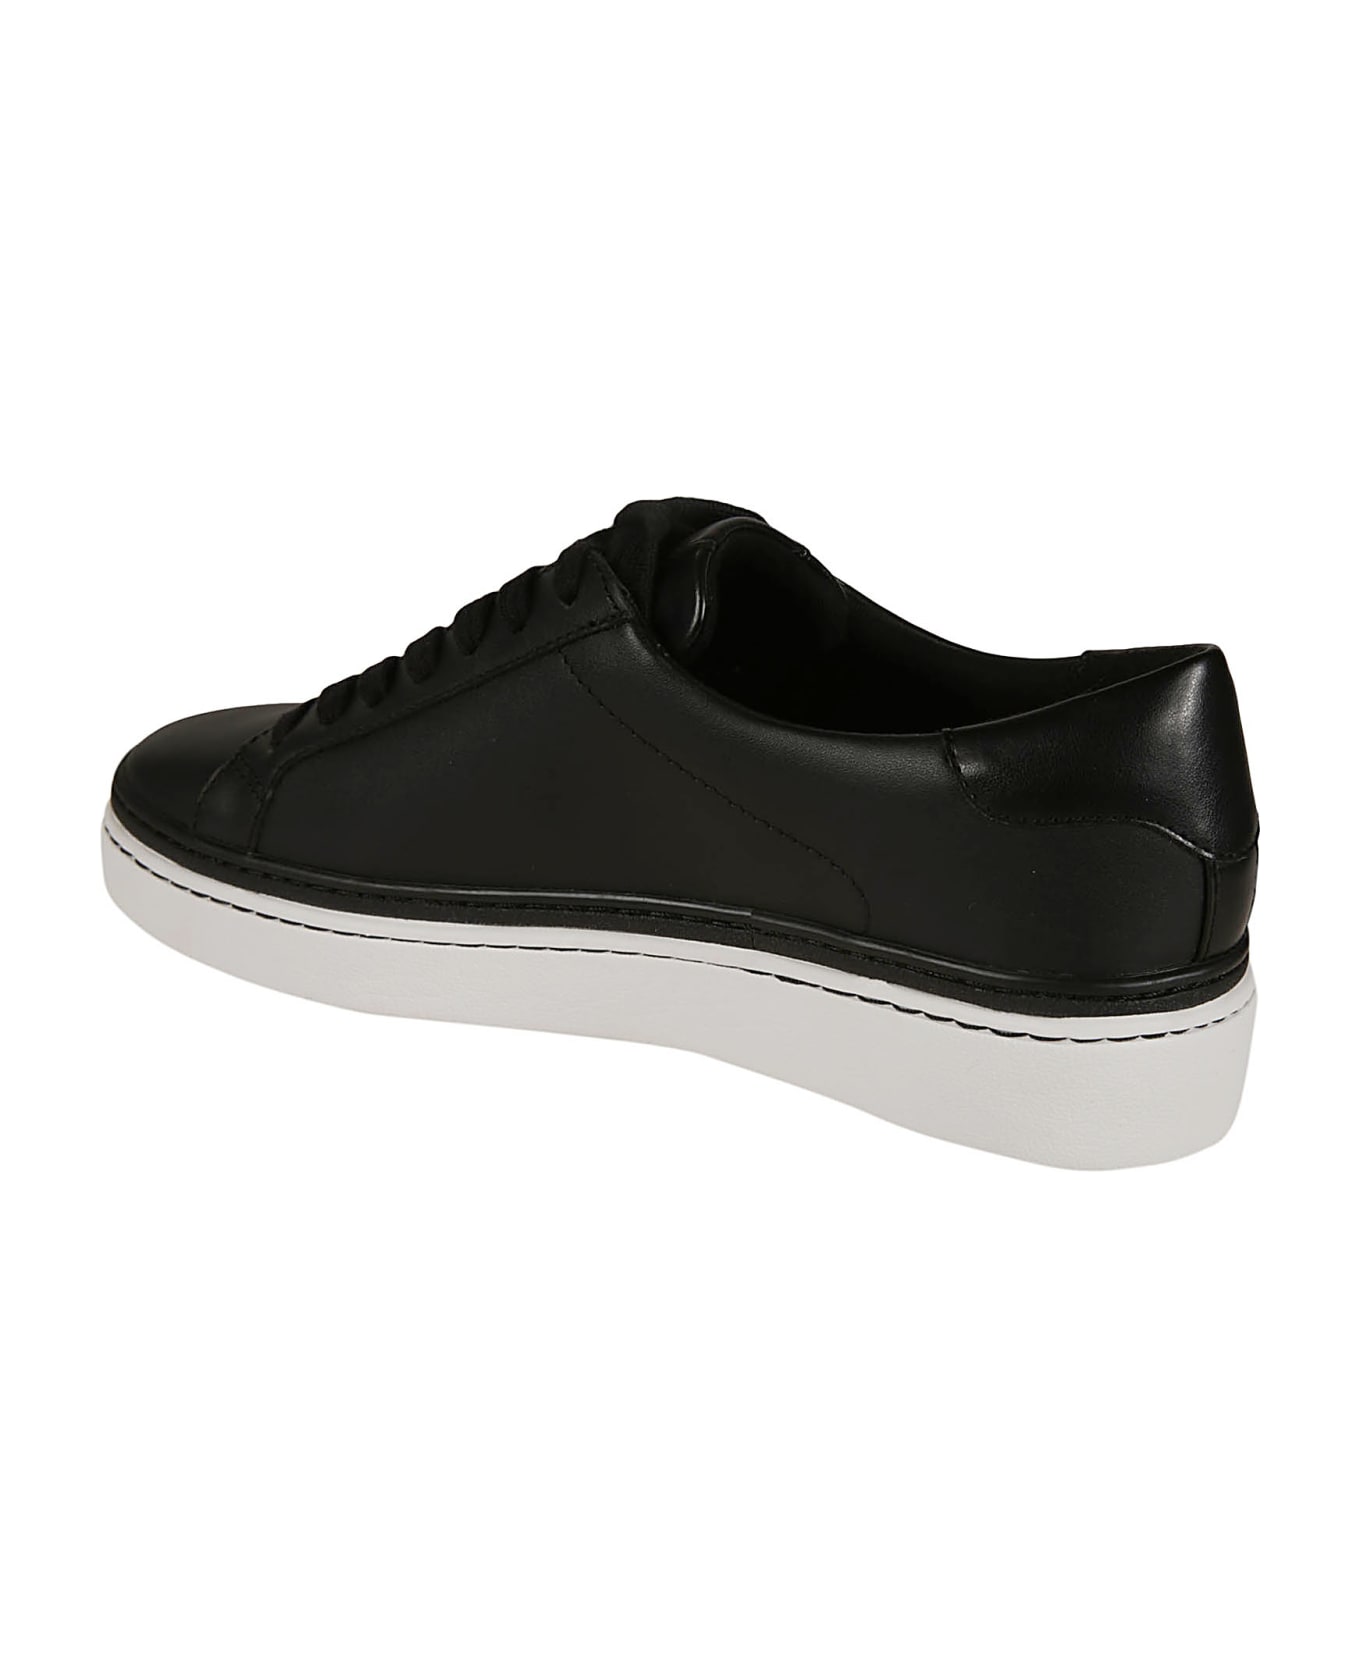 Michael Kors Chapman Lace-up Sneakers - Black